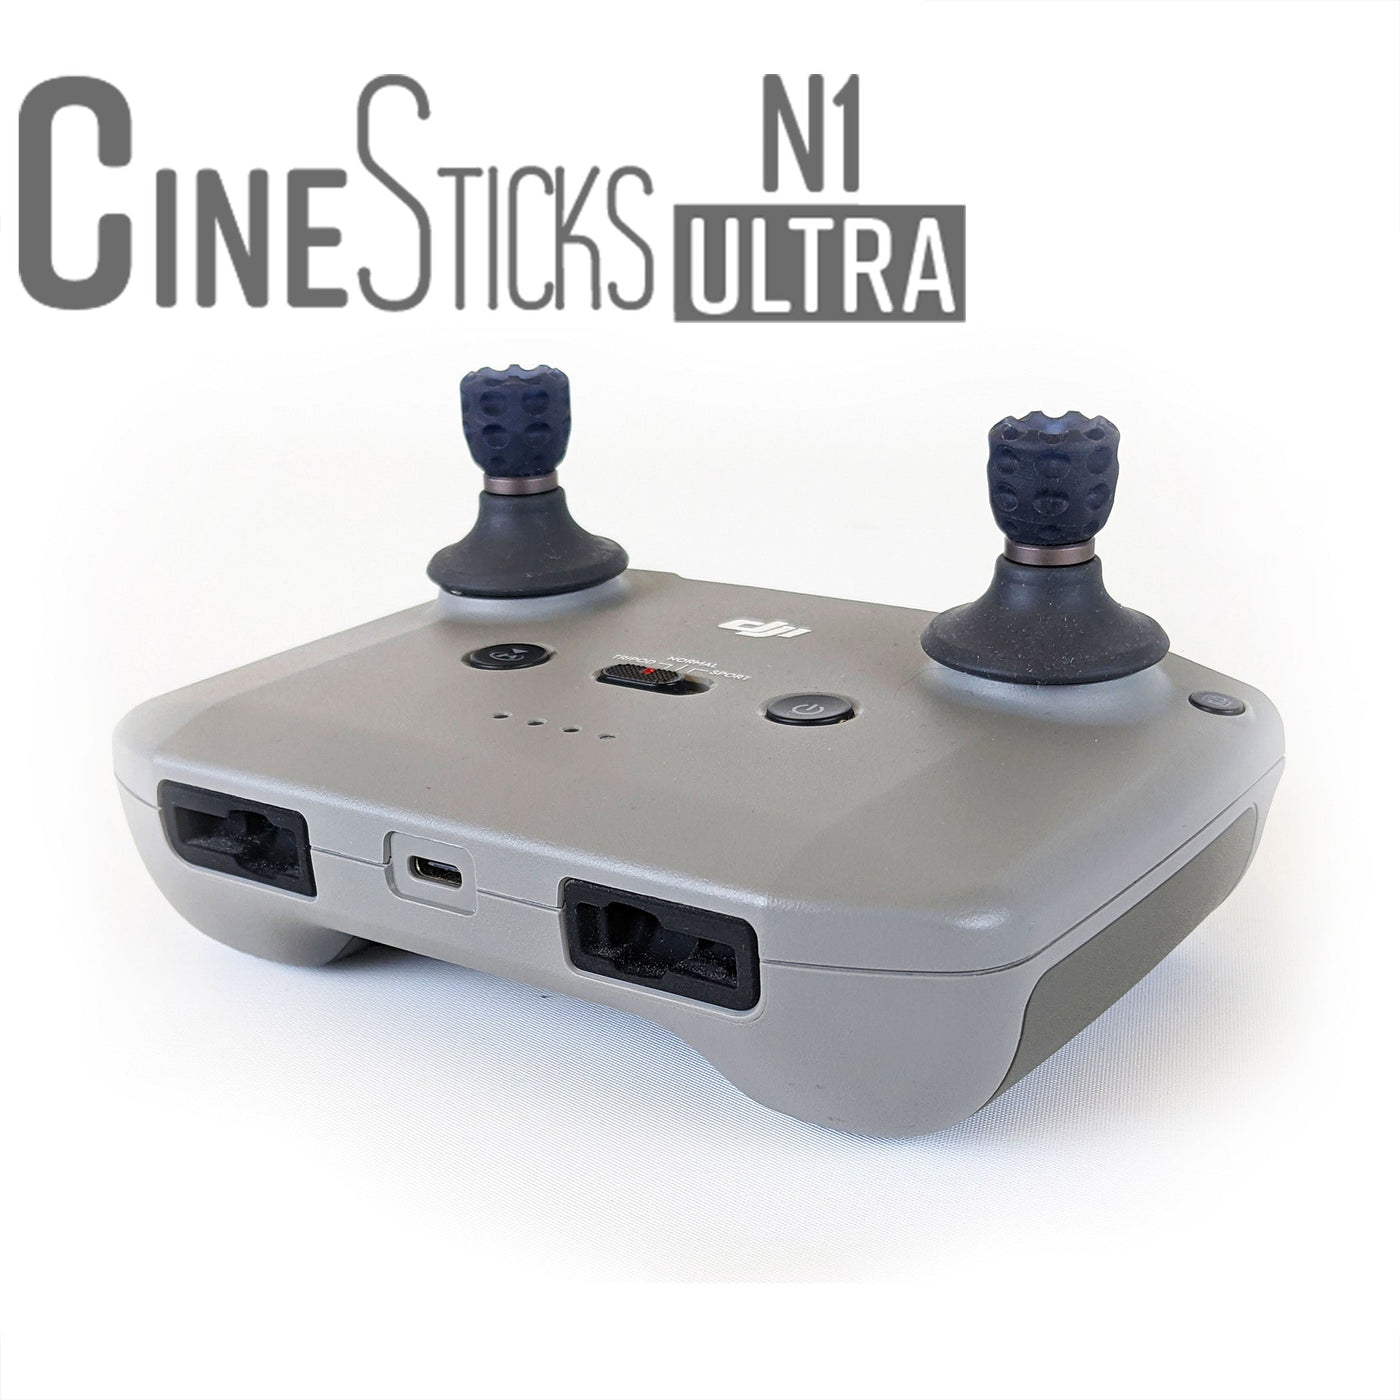 CineSticks N1 Pro - Royaume-Uni